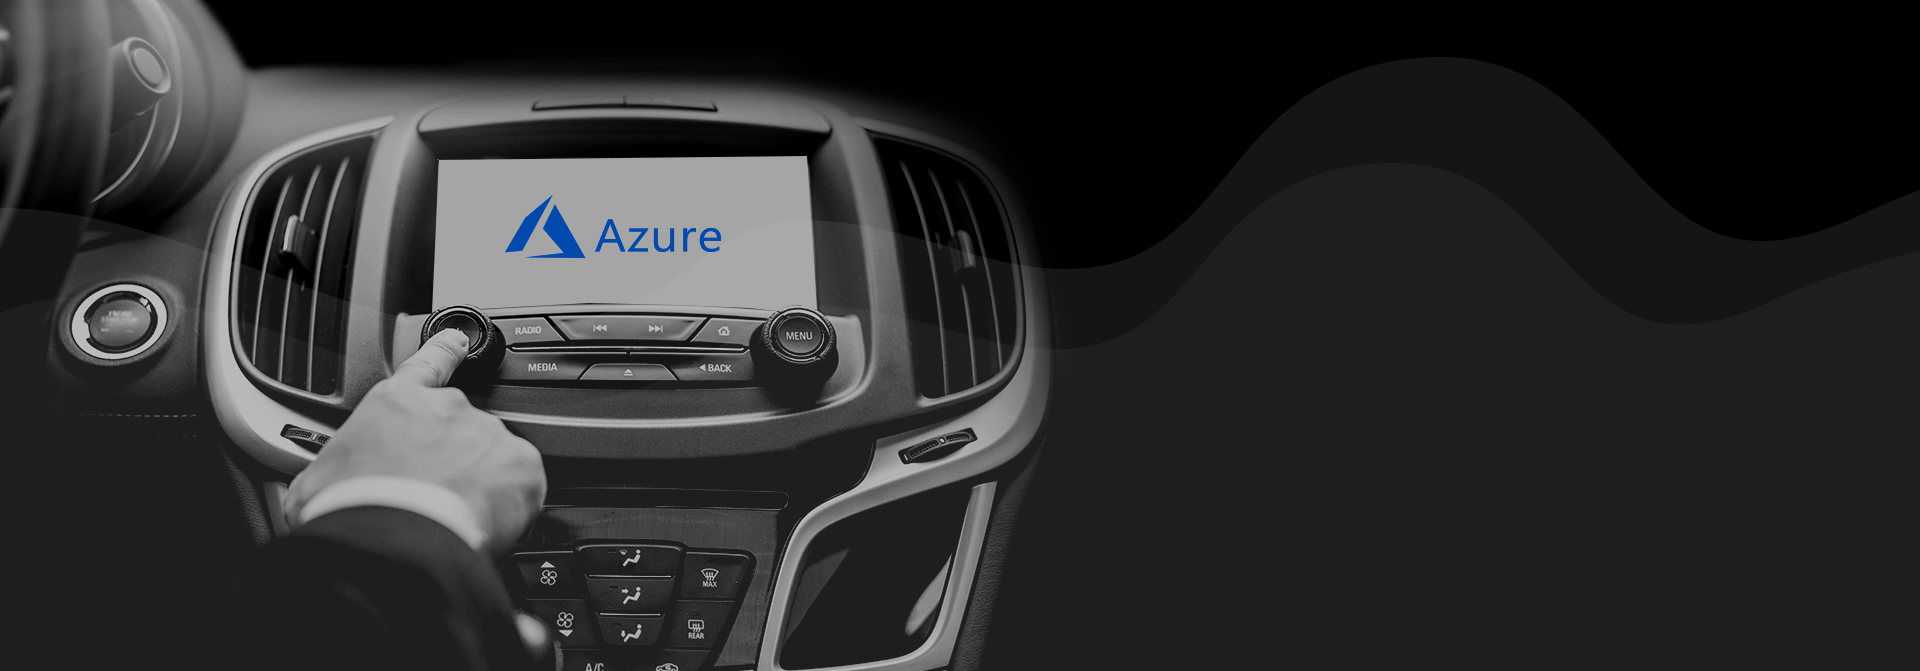 06-Azure-Automotive-industry_banner